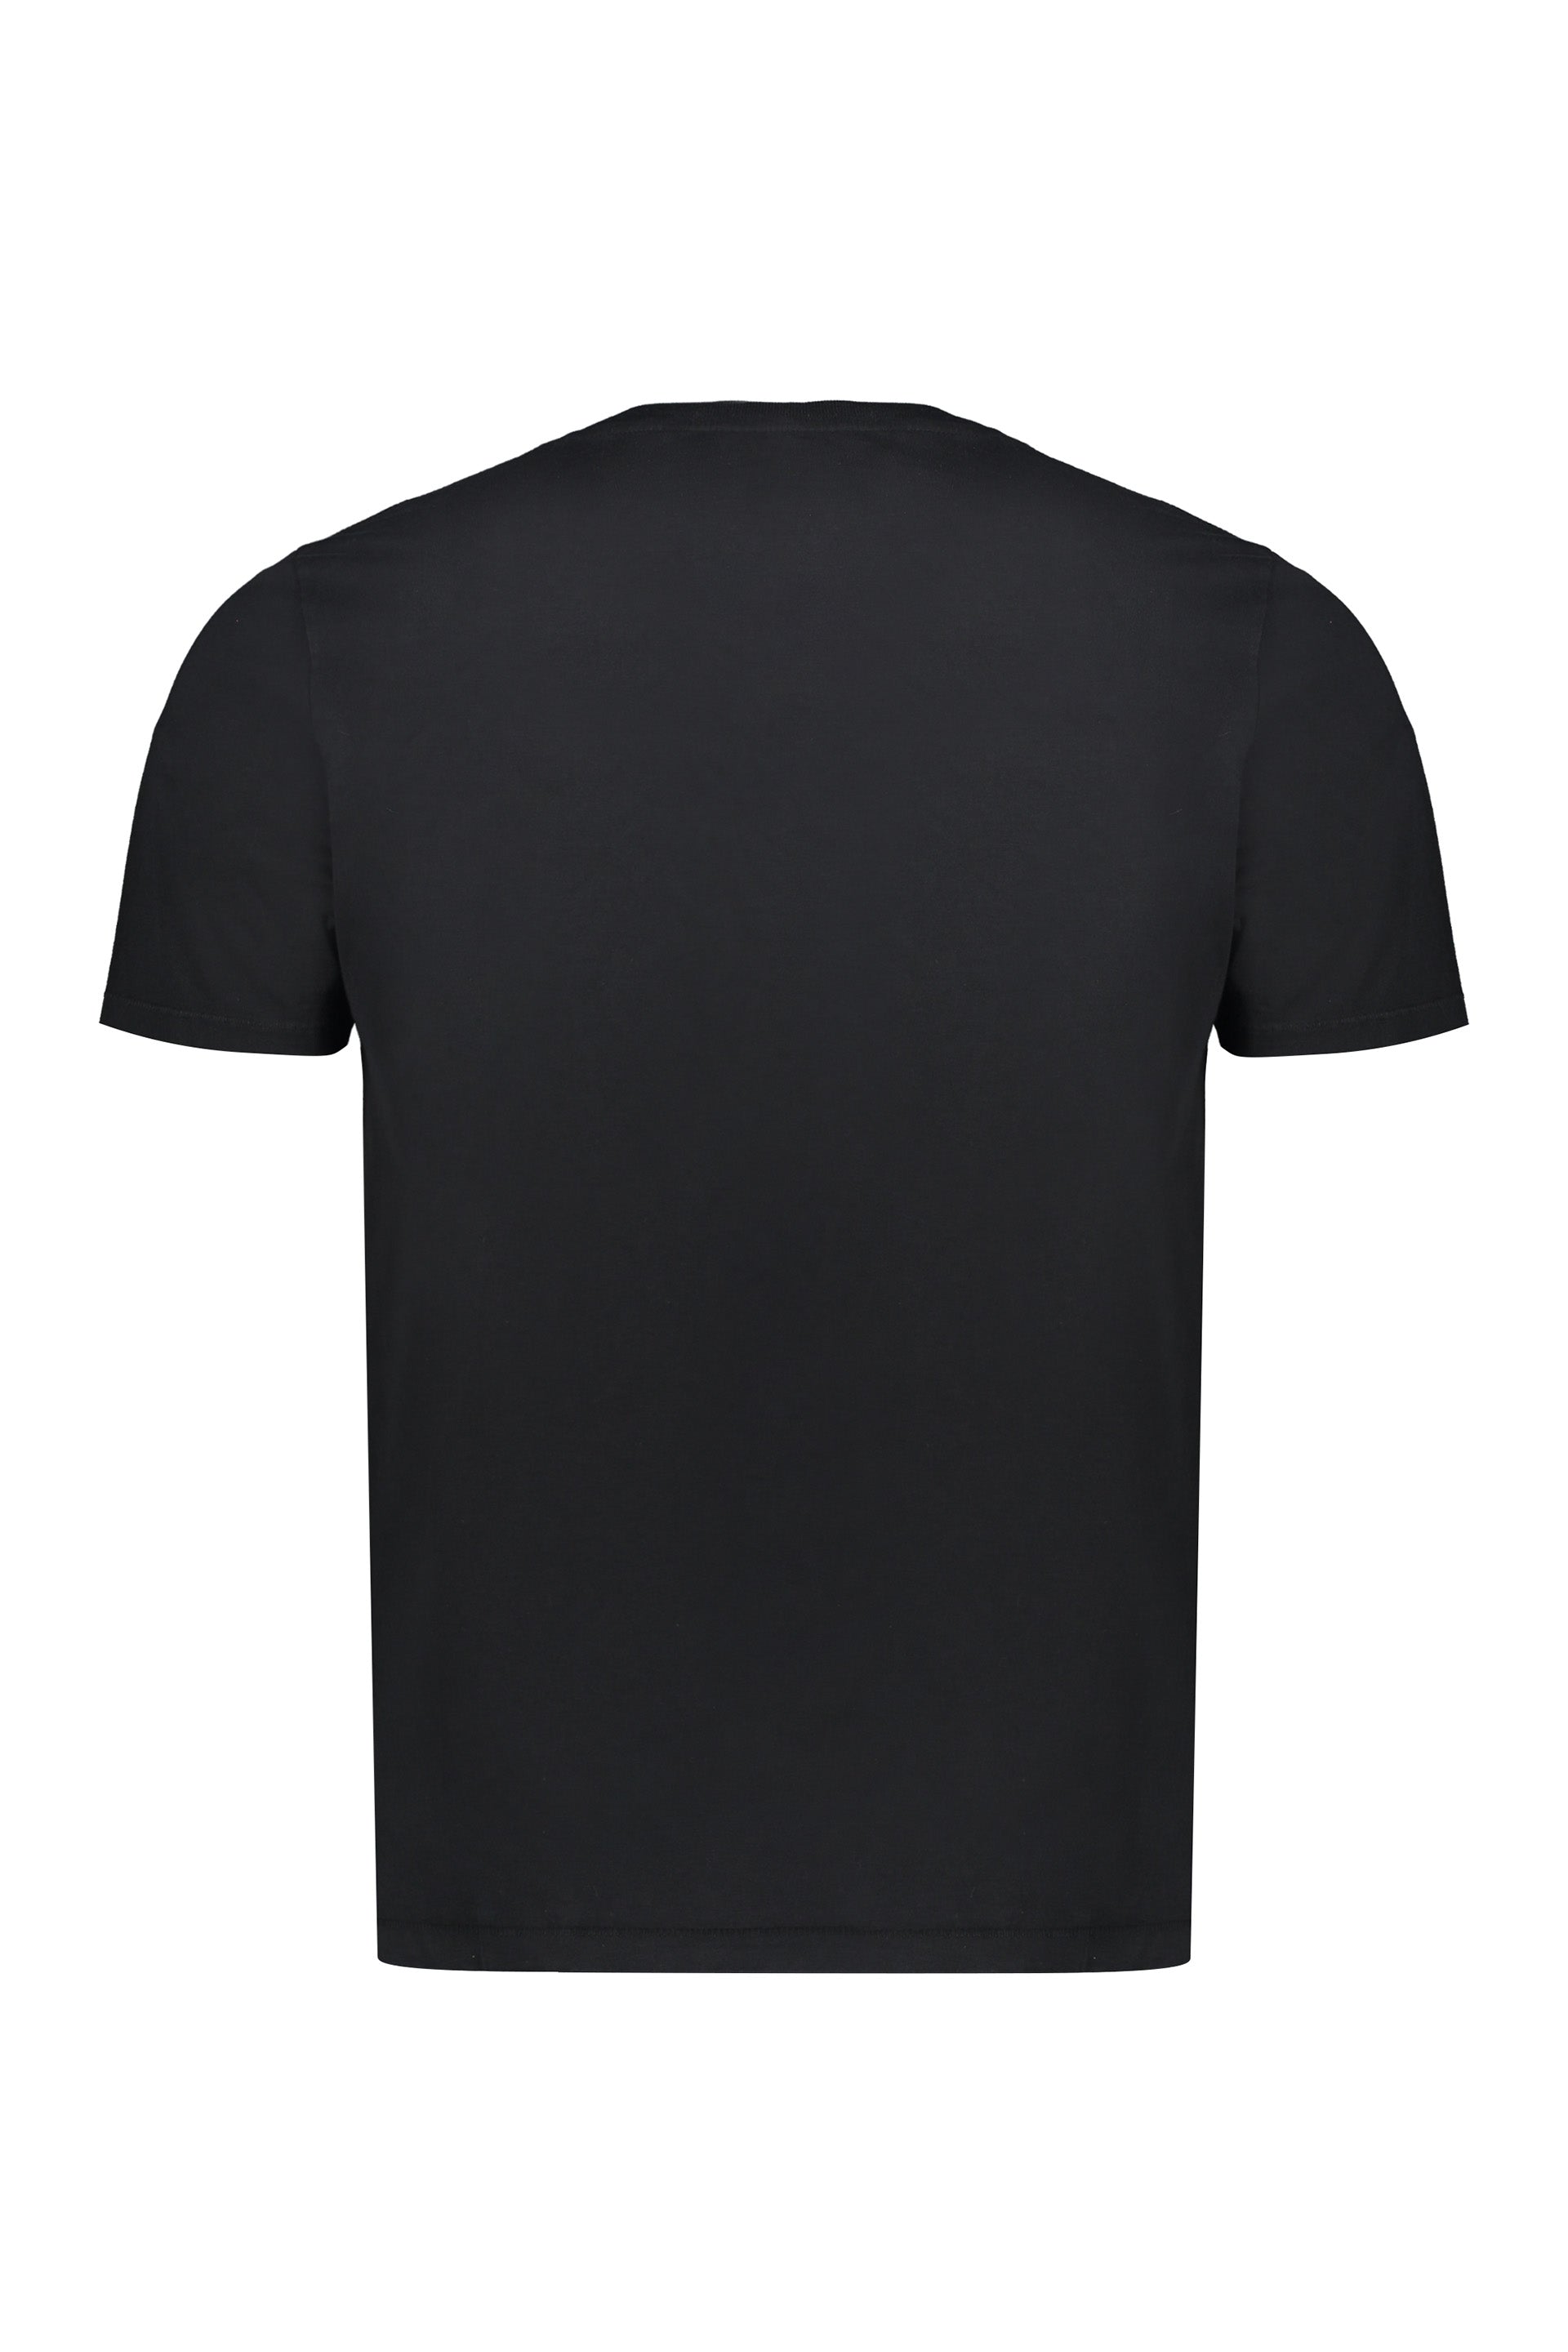 Parajumpers-OUTLET-SALE-Cotton-T-shirt-Shirts-S-ARCHIVE-COLLECTION-2.jpg